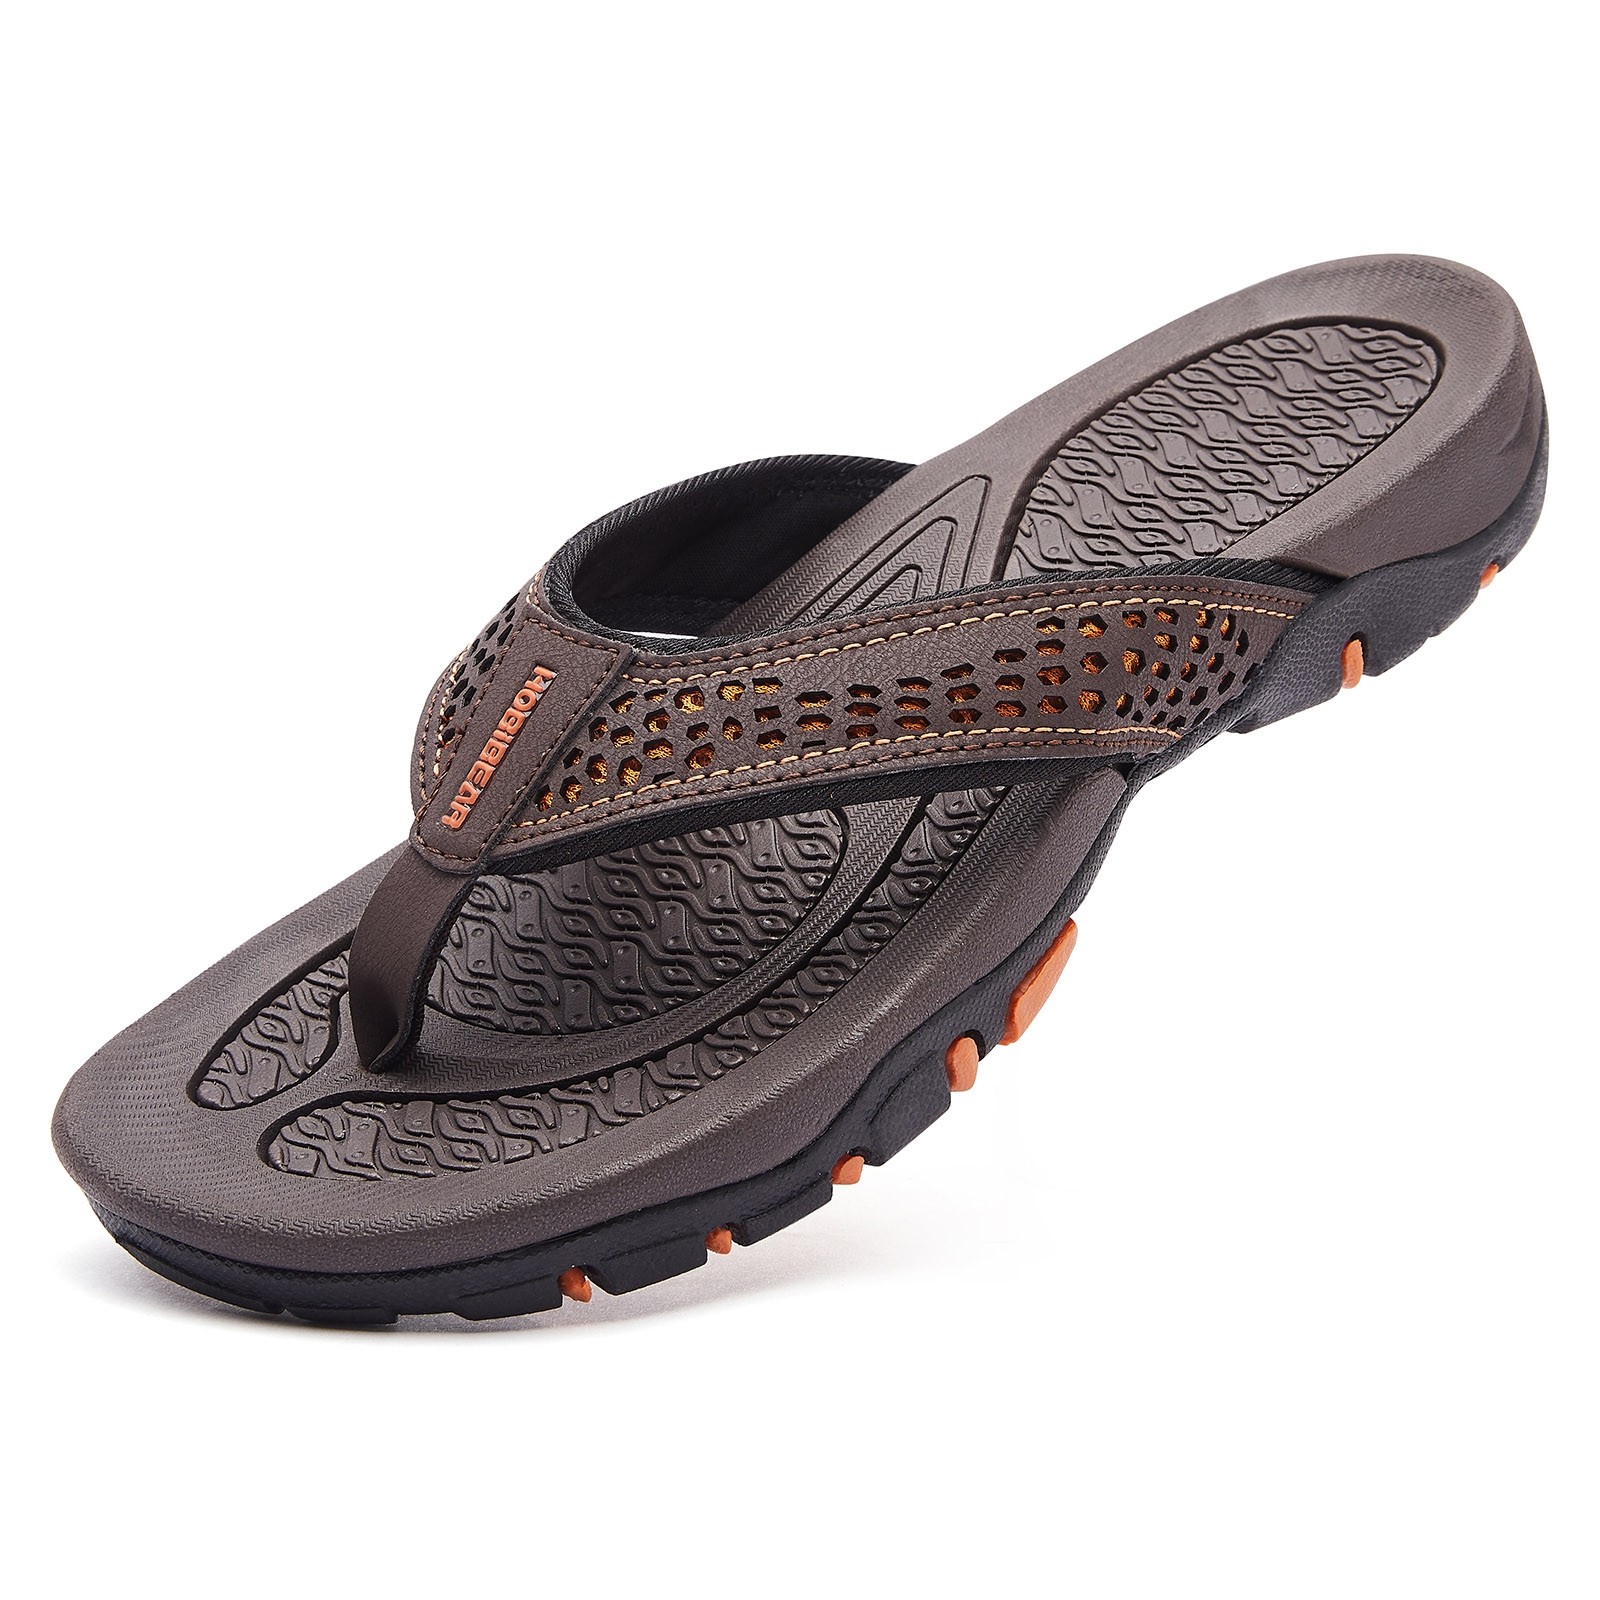 Mens Thong Sandals Indoor and Outdoor Beach Flip Flop Brown/Orange (Size 11.5)